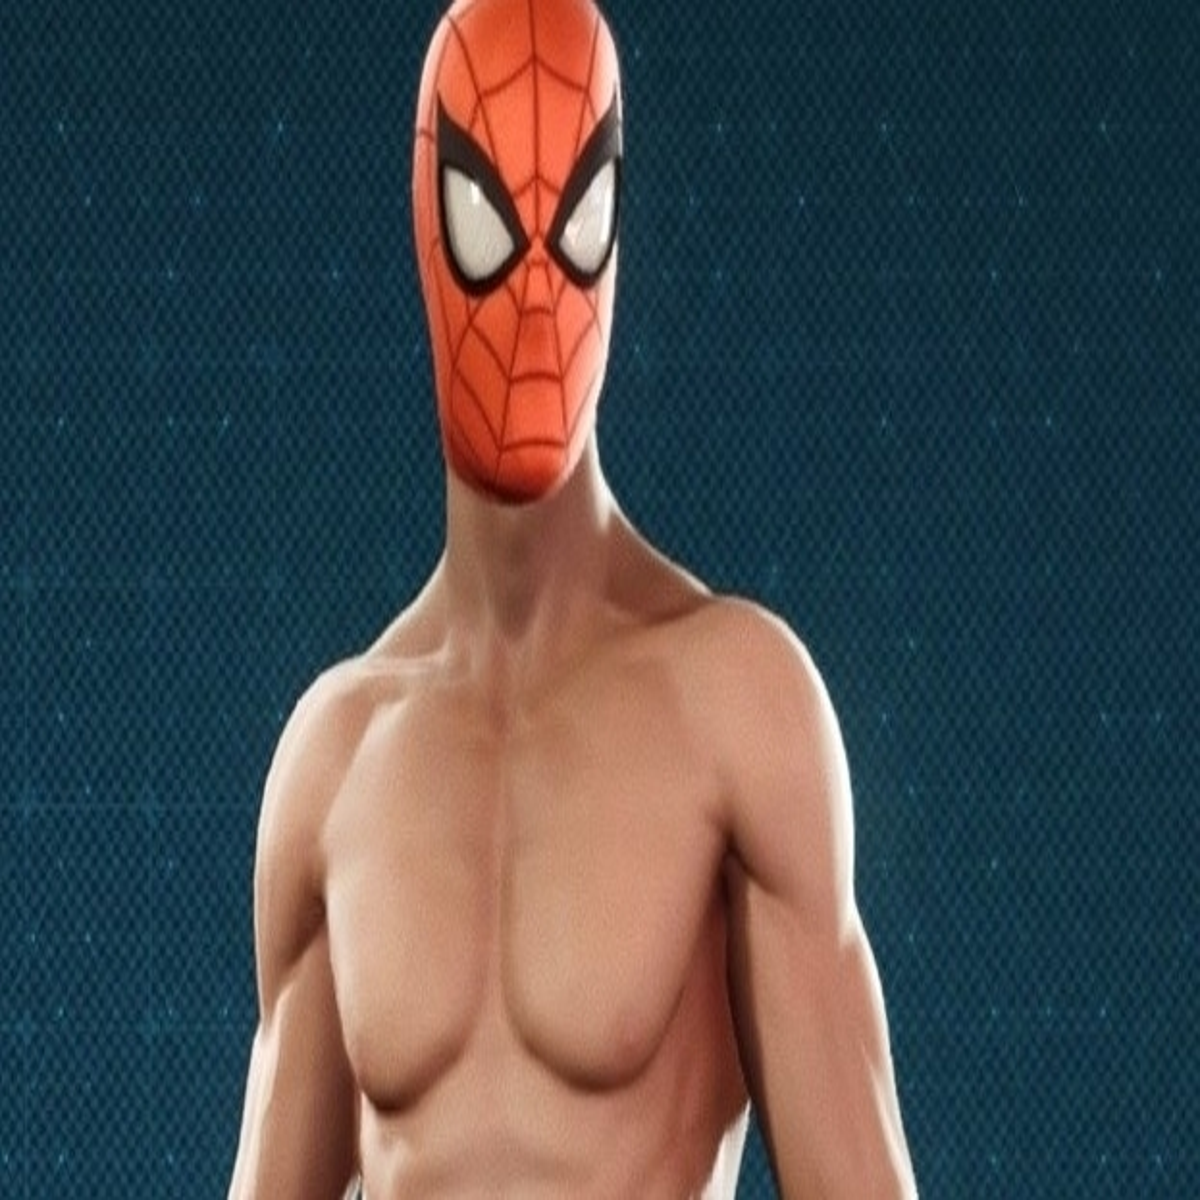 Spider-Man PS4 Undies Peter Parker Spiderman Cosplay Costume with